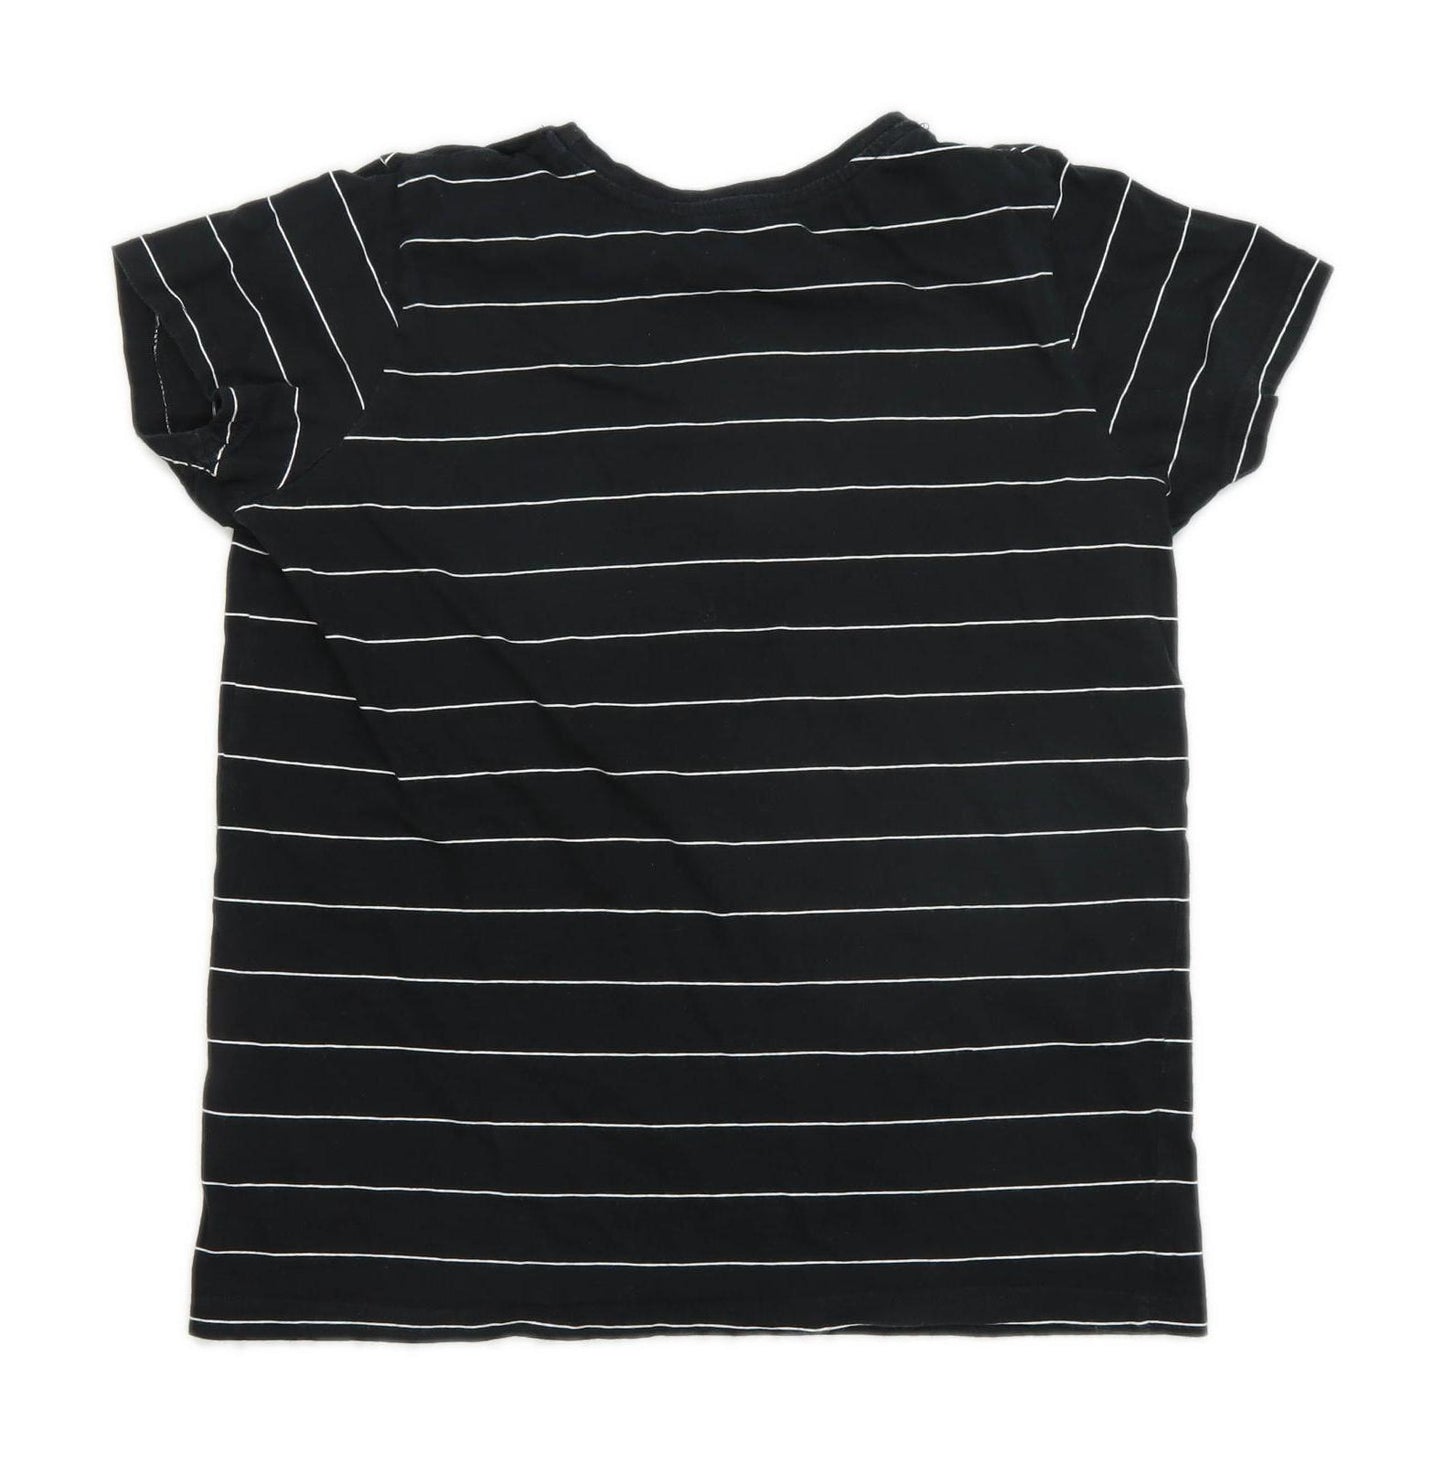 Primark Boys Striped Black T-Shirt Age 12-13 Years